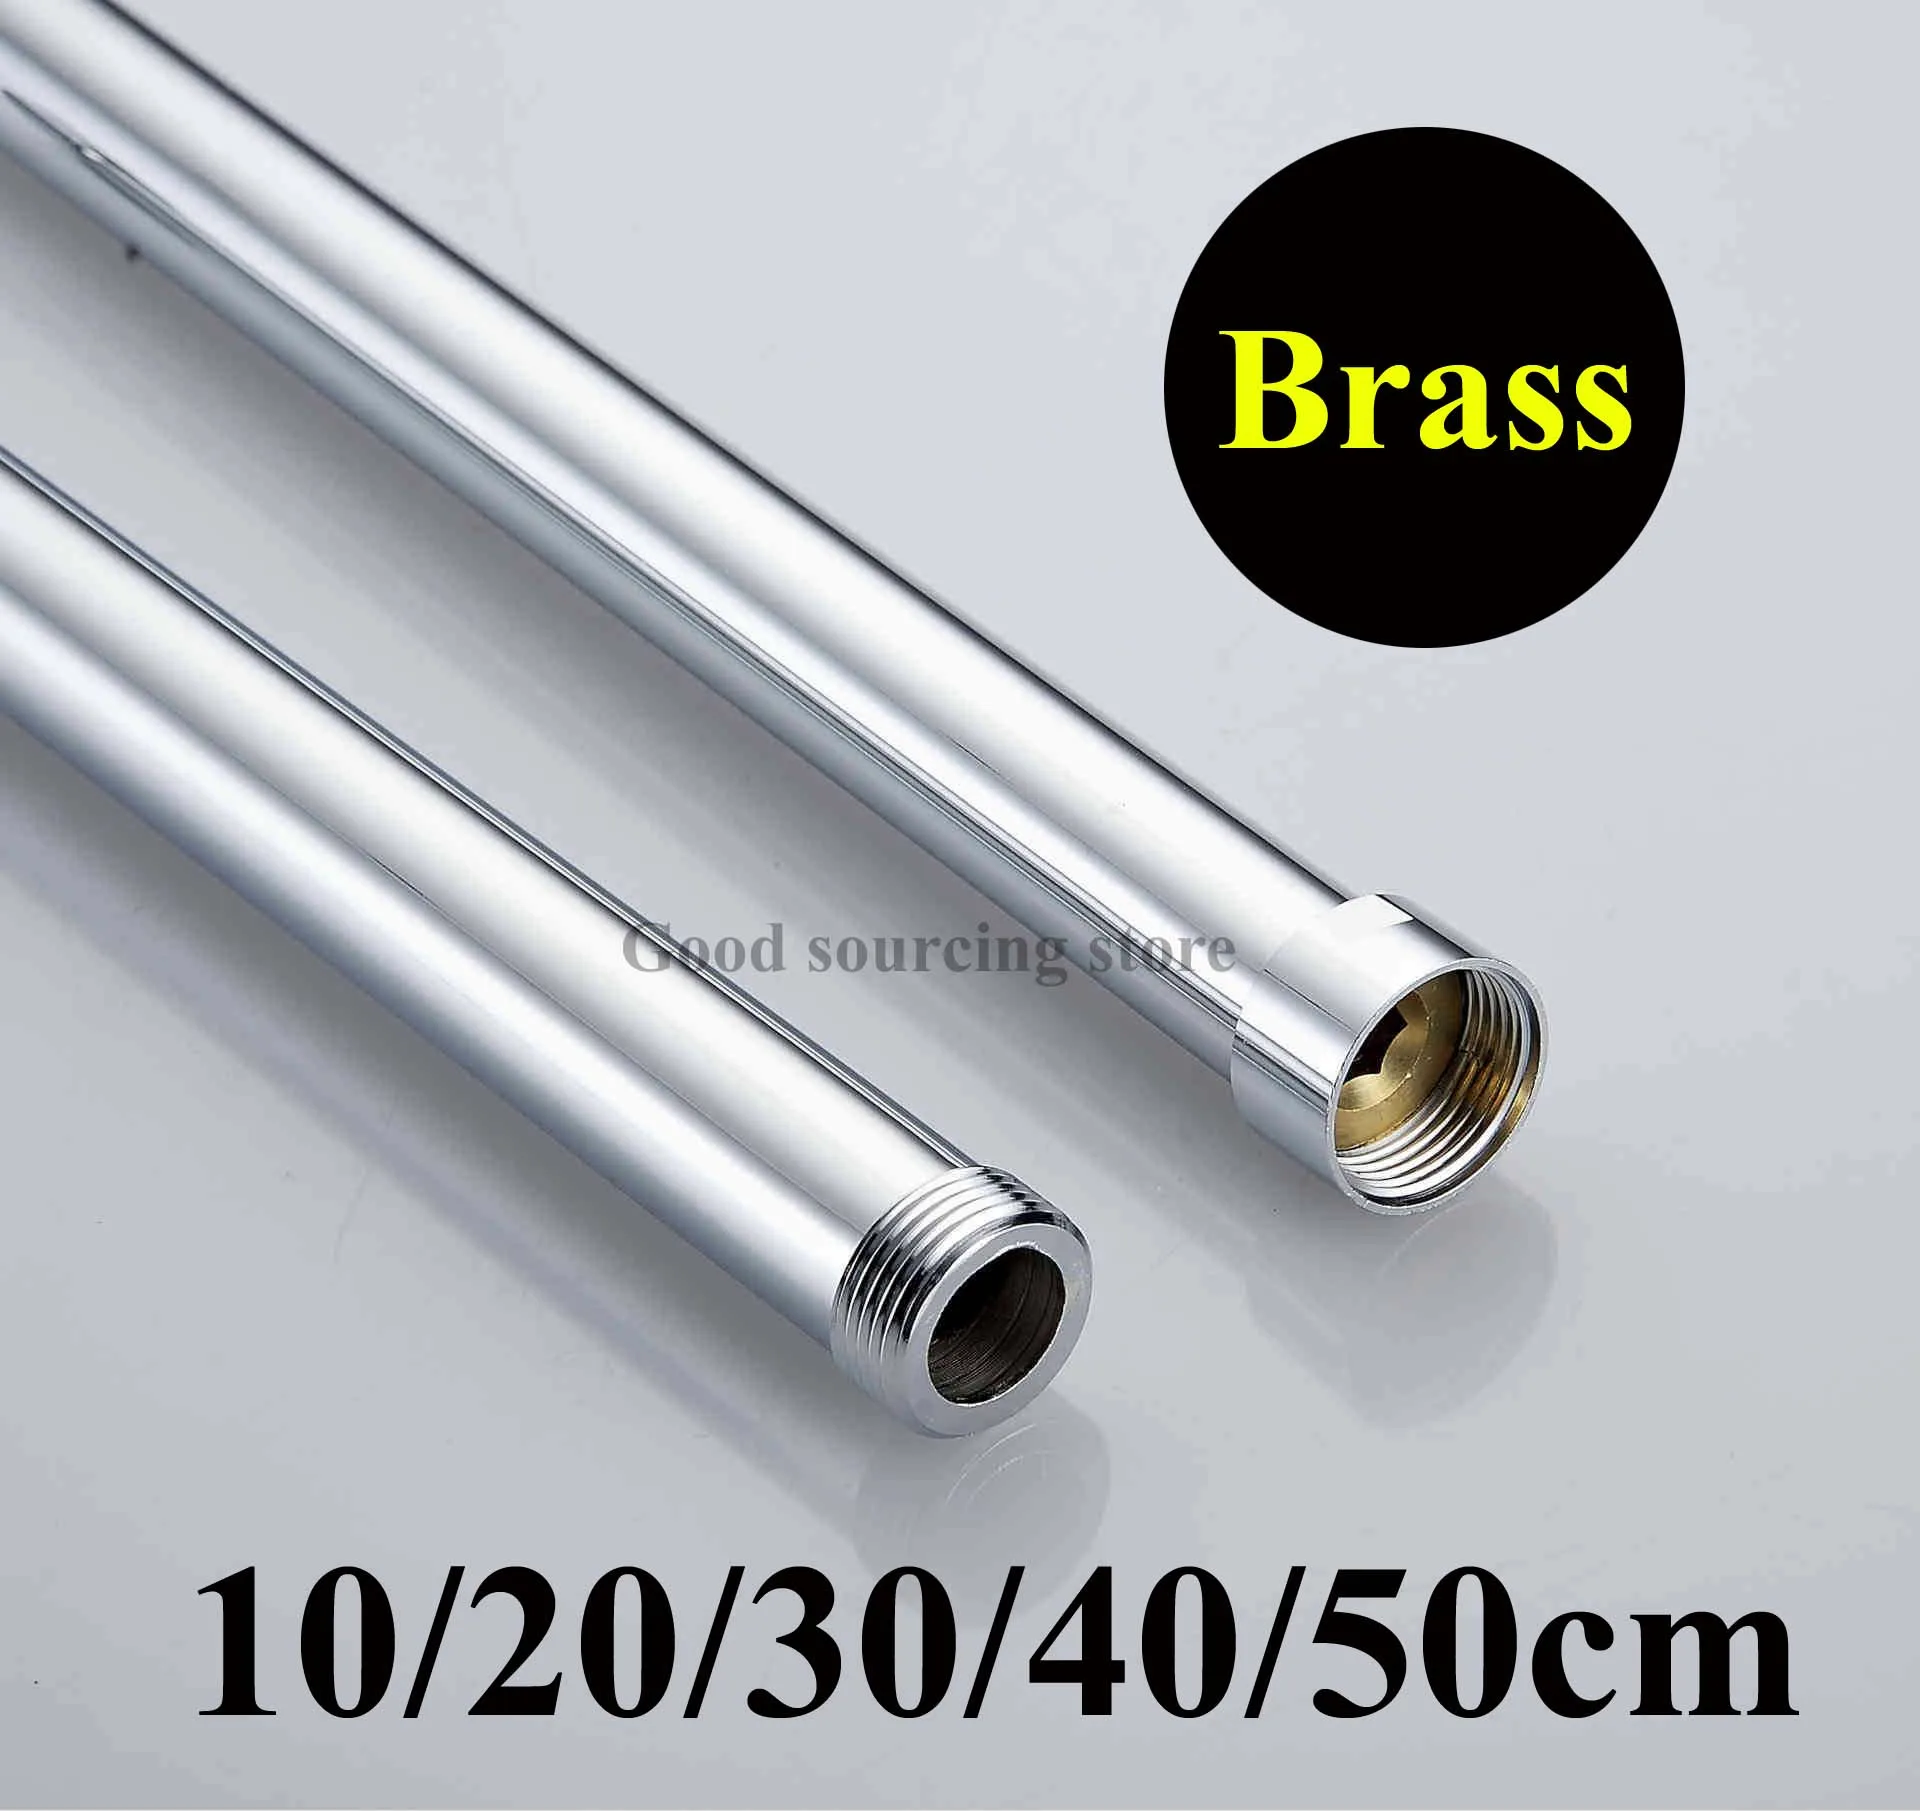 10/20/30/40/50cm brass shower extension rod tube bar pipe - купить по выгодной цене |